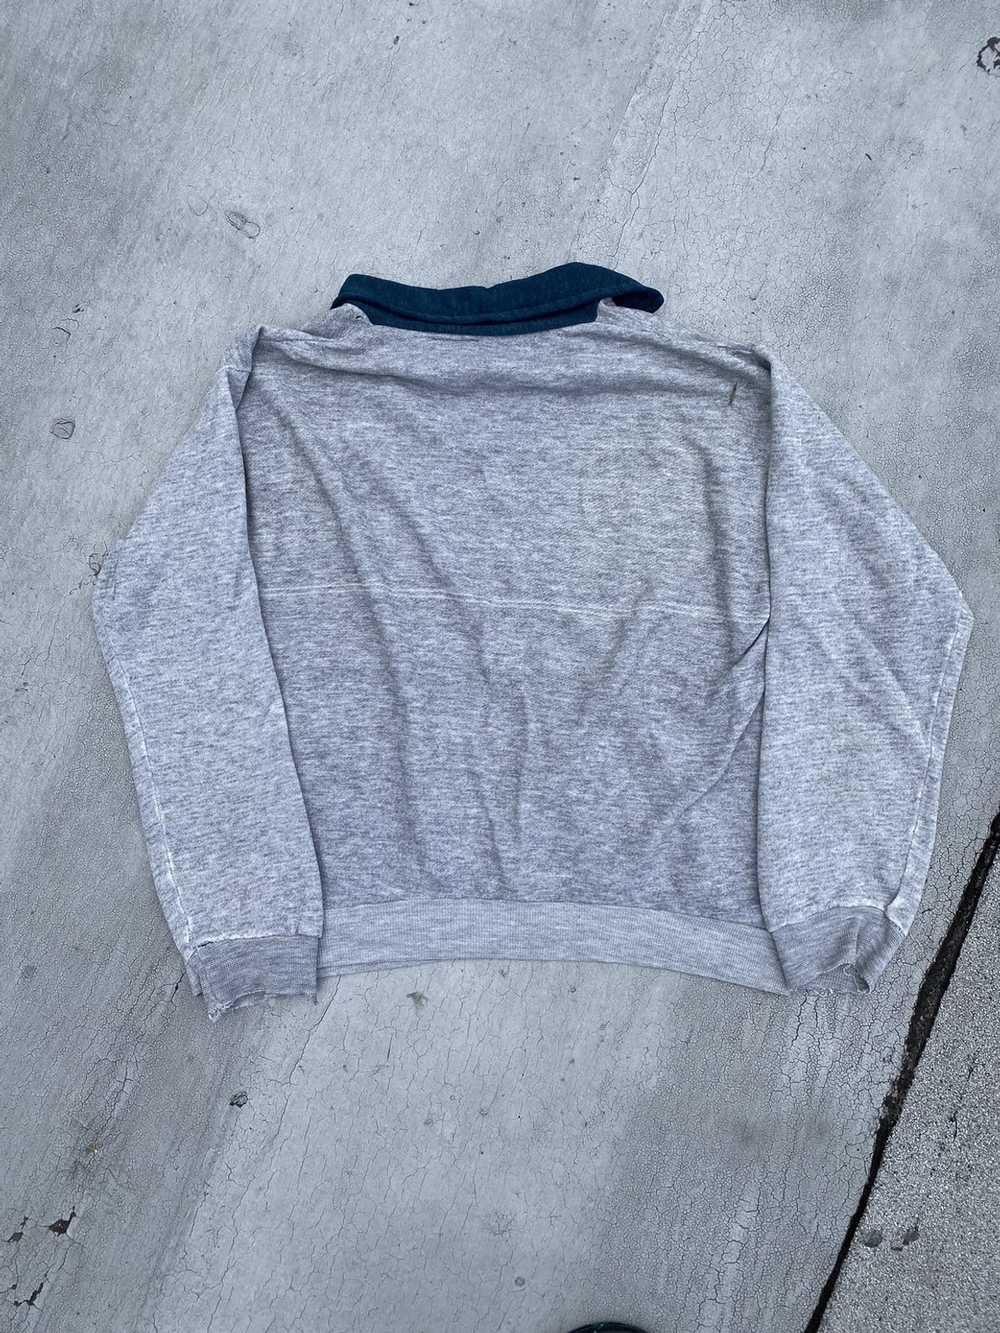 Vintage Distressed collared crewneck sweater - image 2